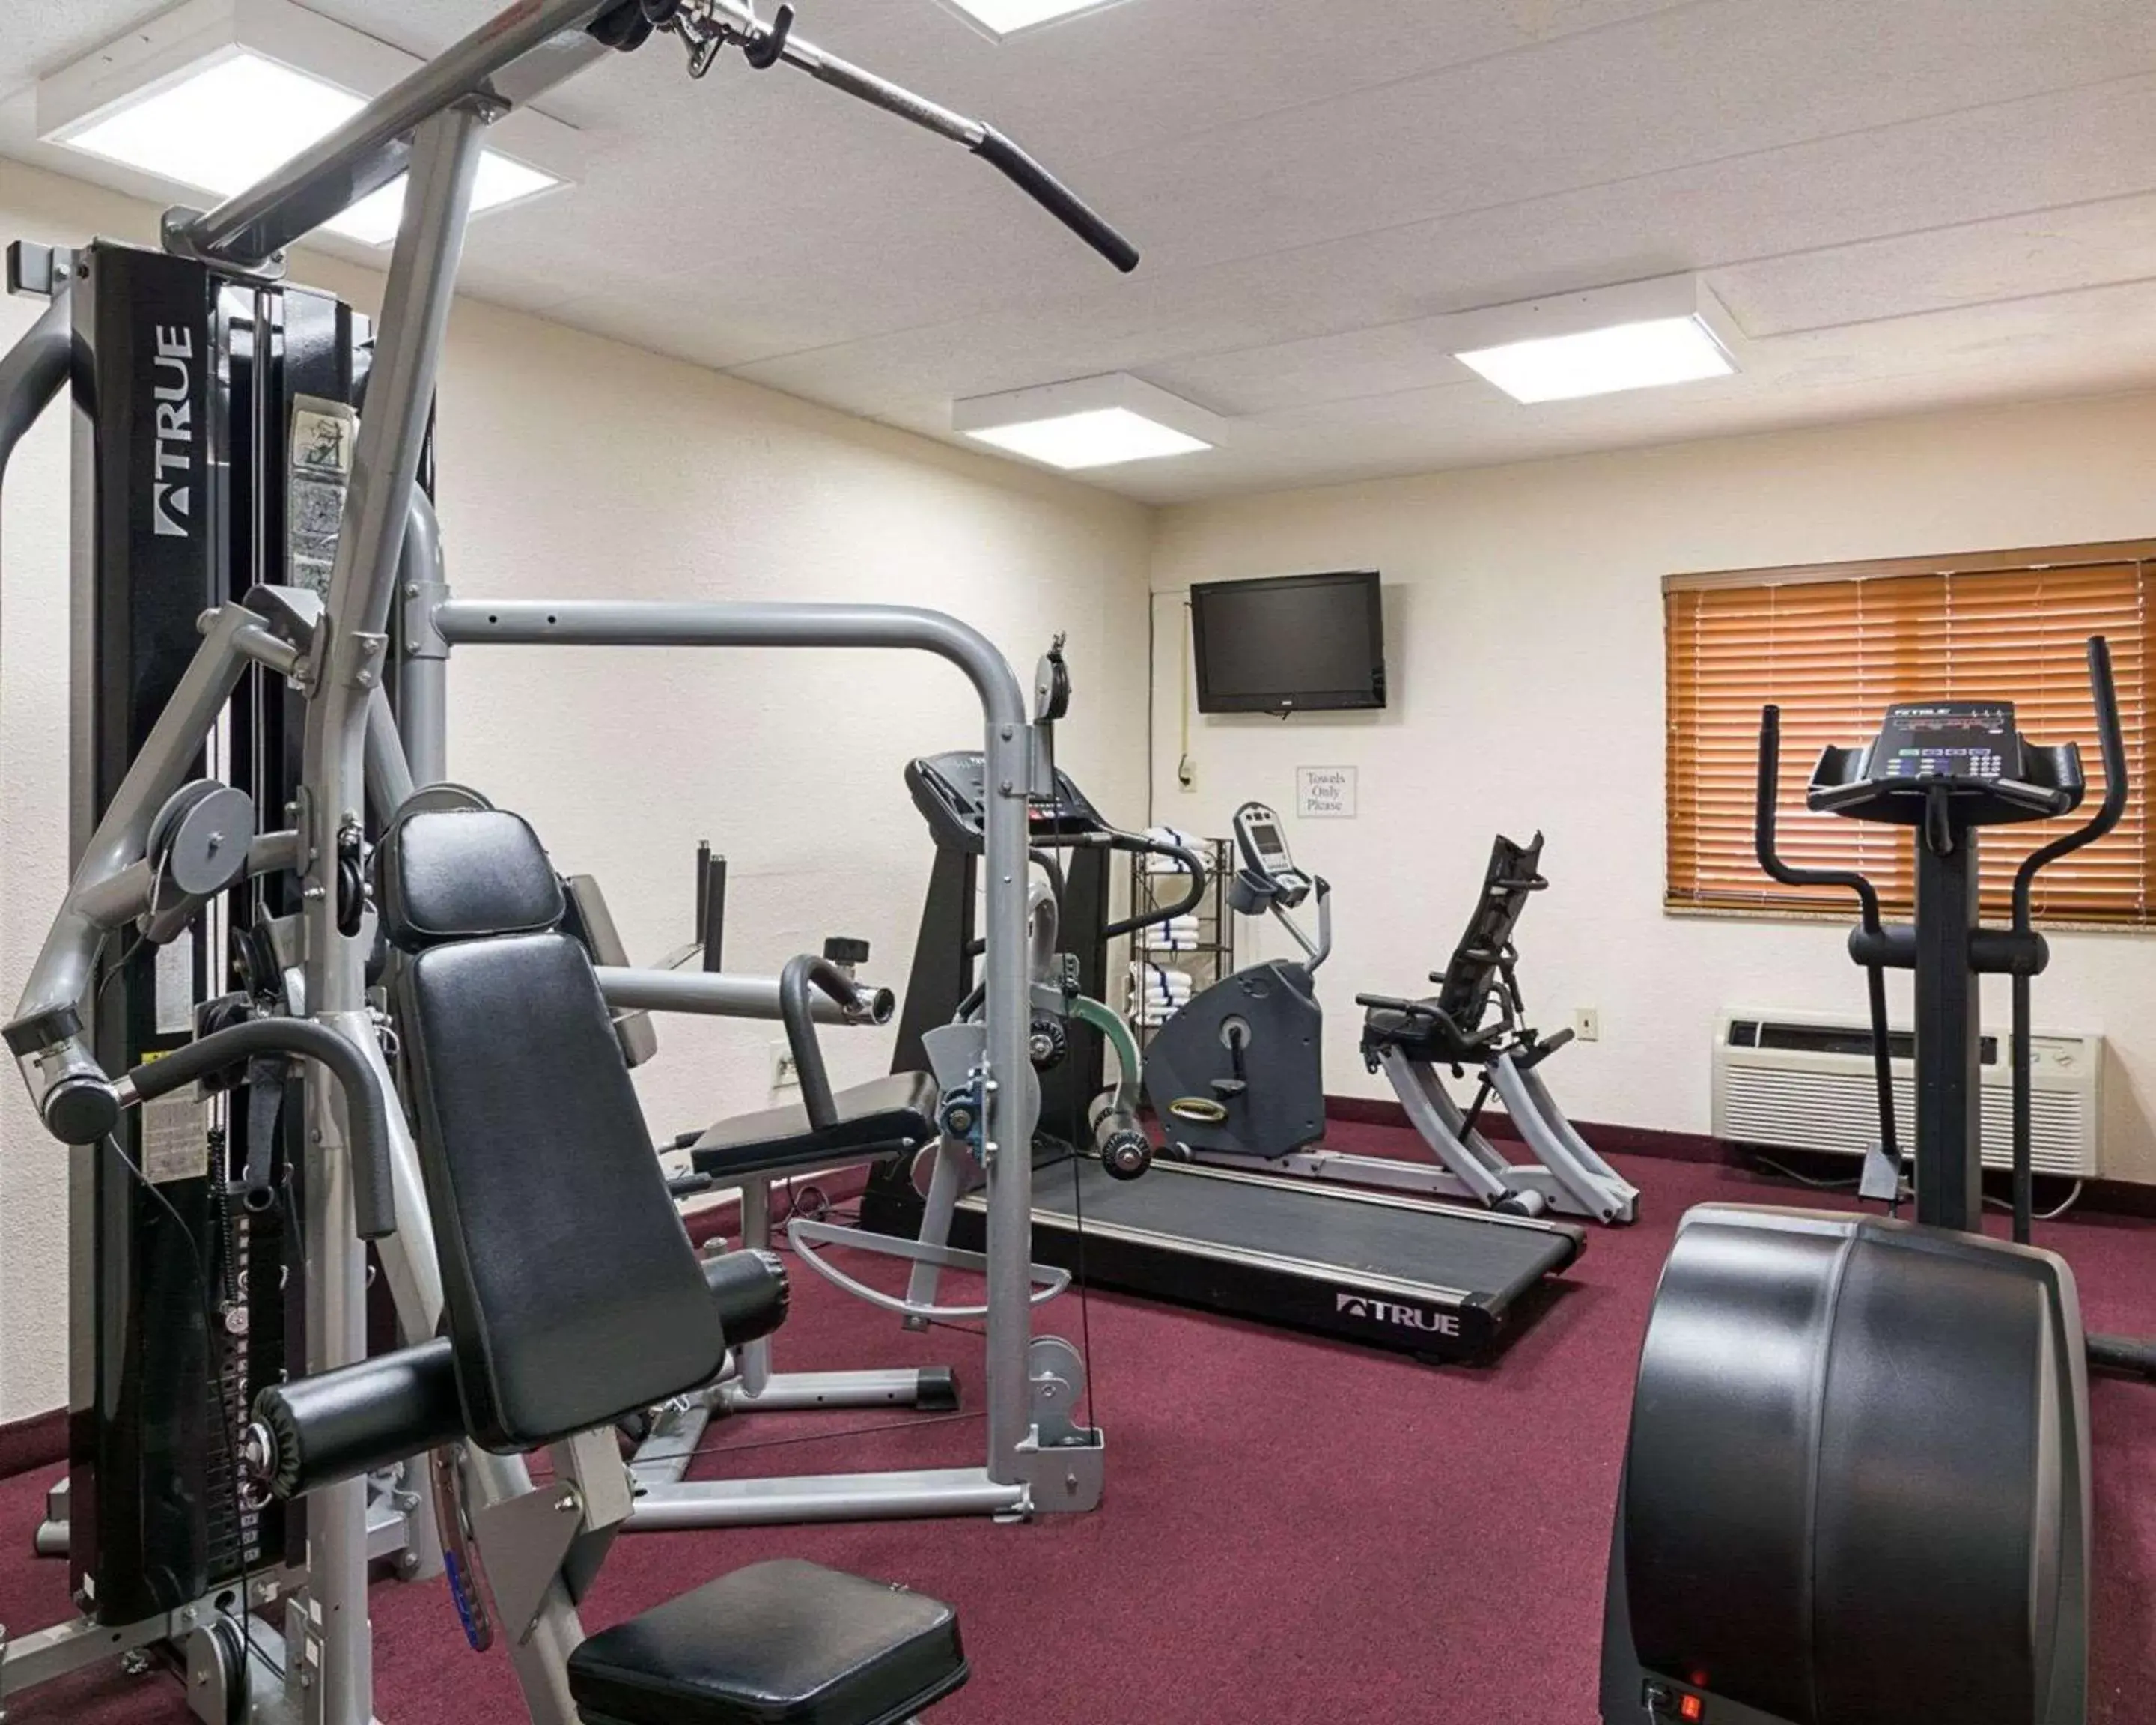 Fitness centre/facilities, Fitness Center/Facilities in Comfort Inn Oxon Hill